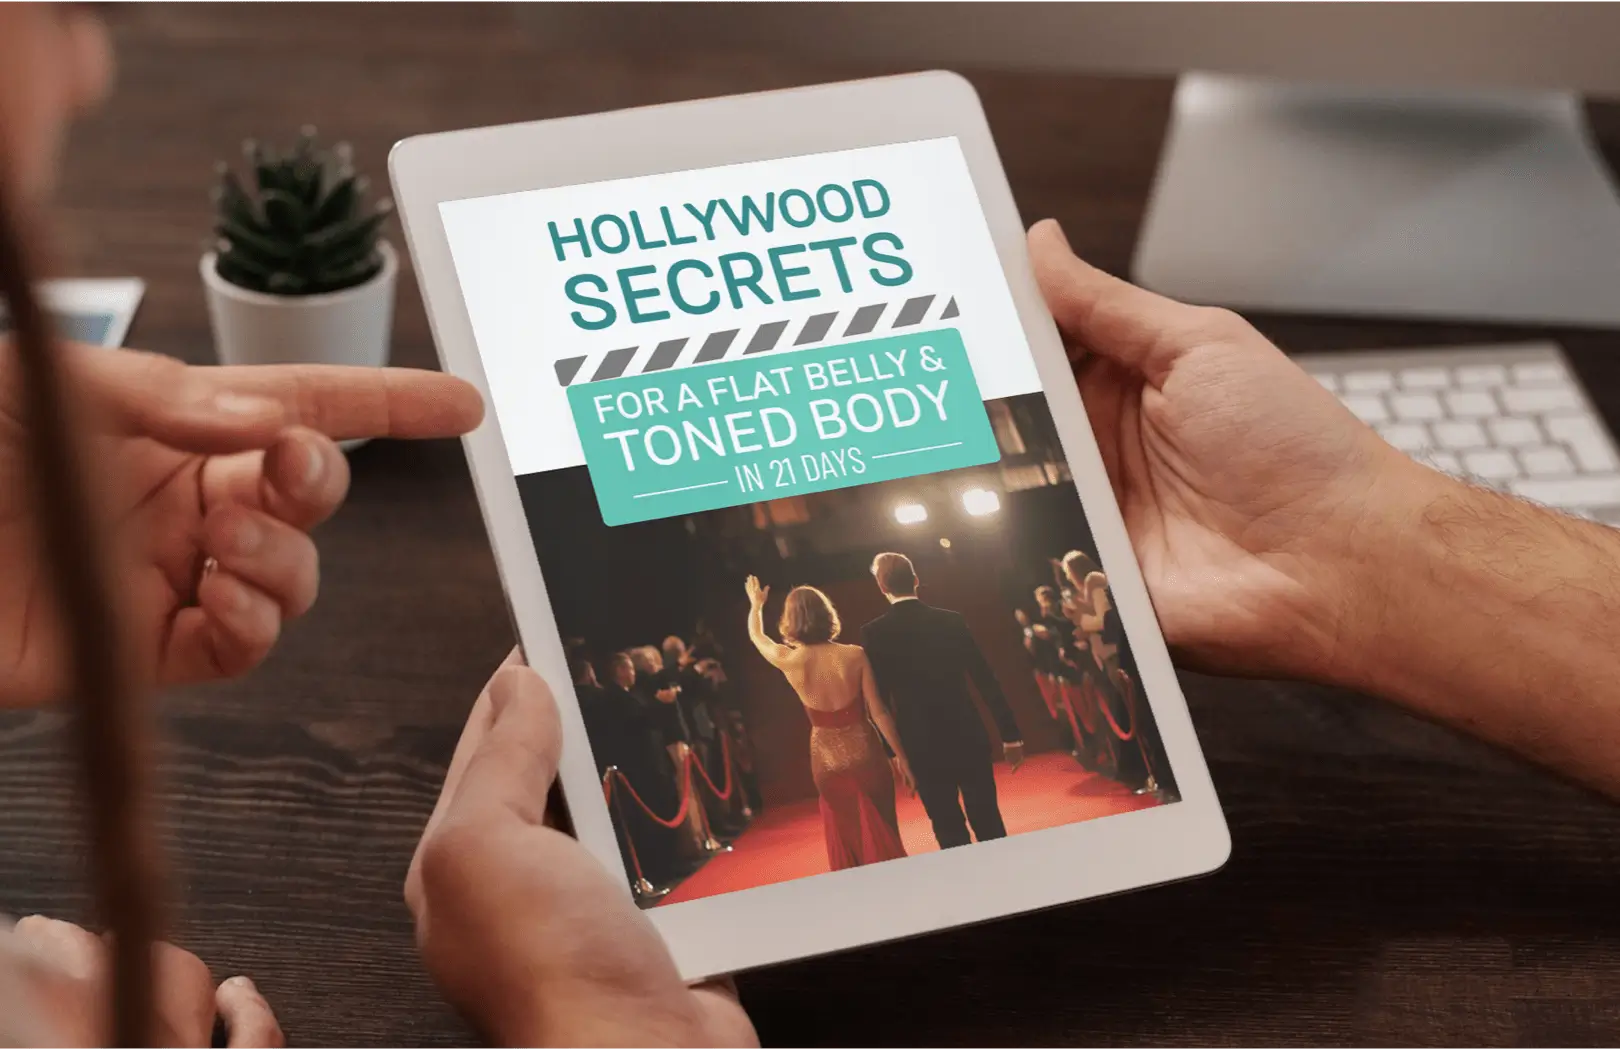 Gutoptim-Bonus-1-Hollywood-Secrets-for-A-Flat-Belly-&-Toned-Body-in-21-Days